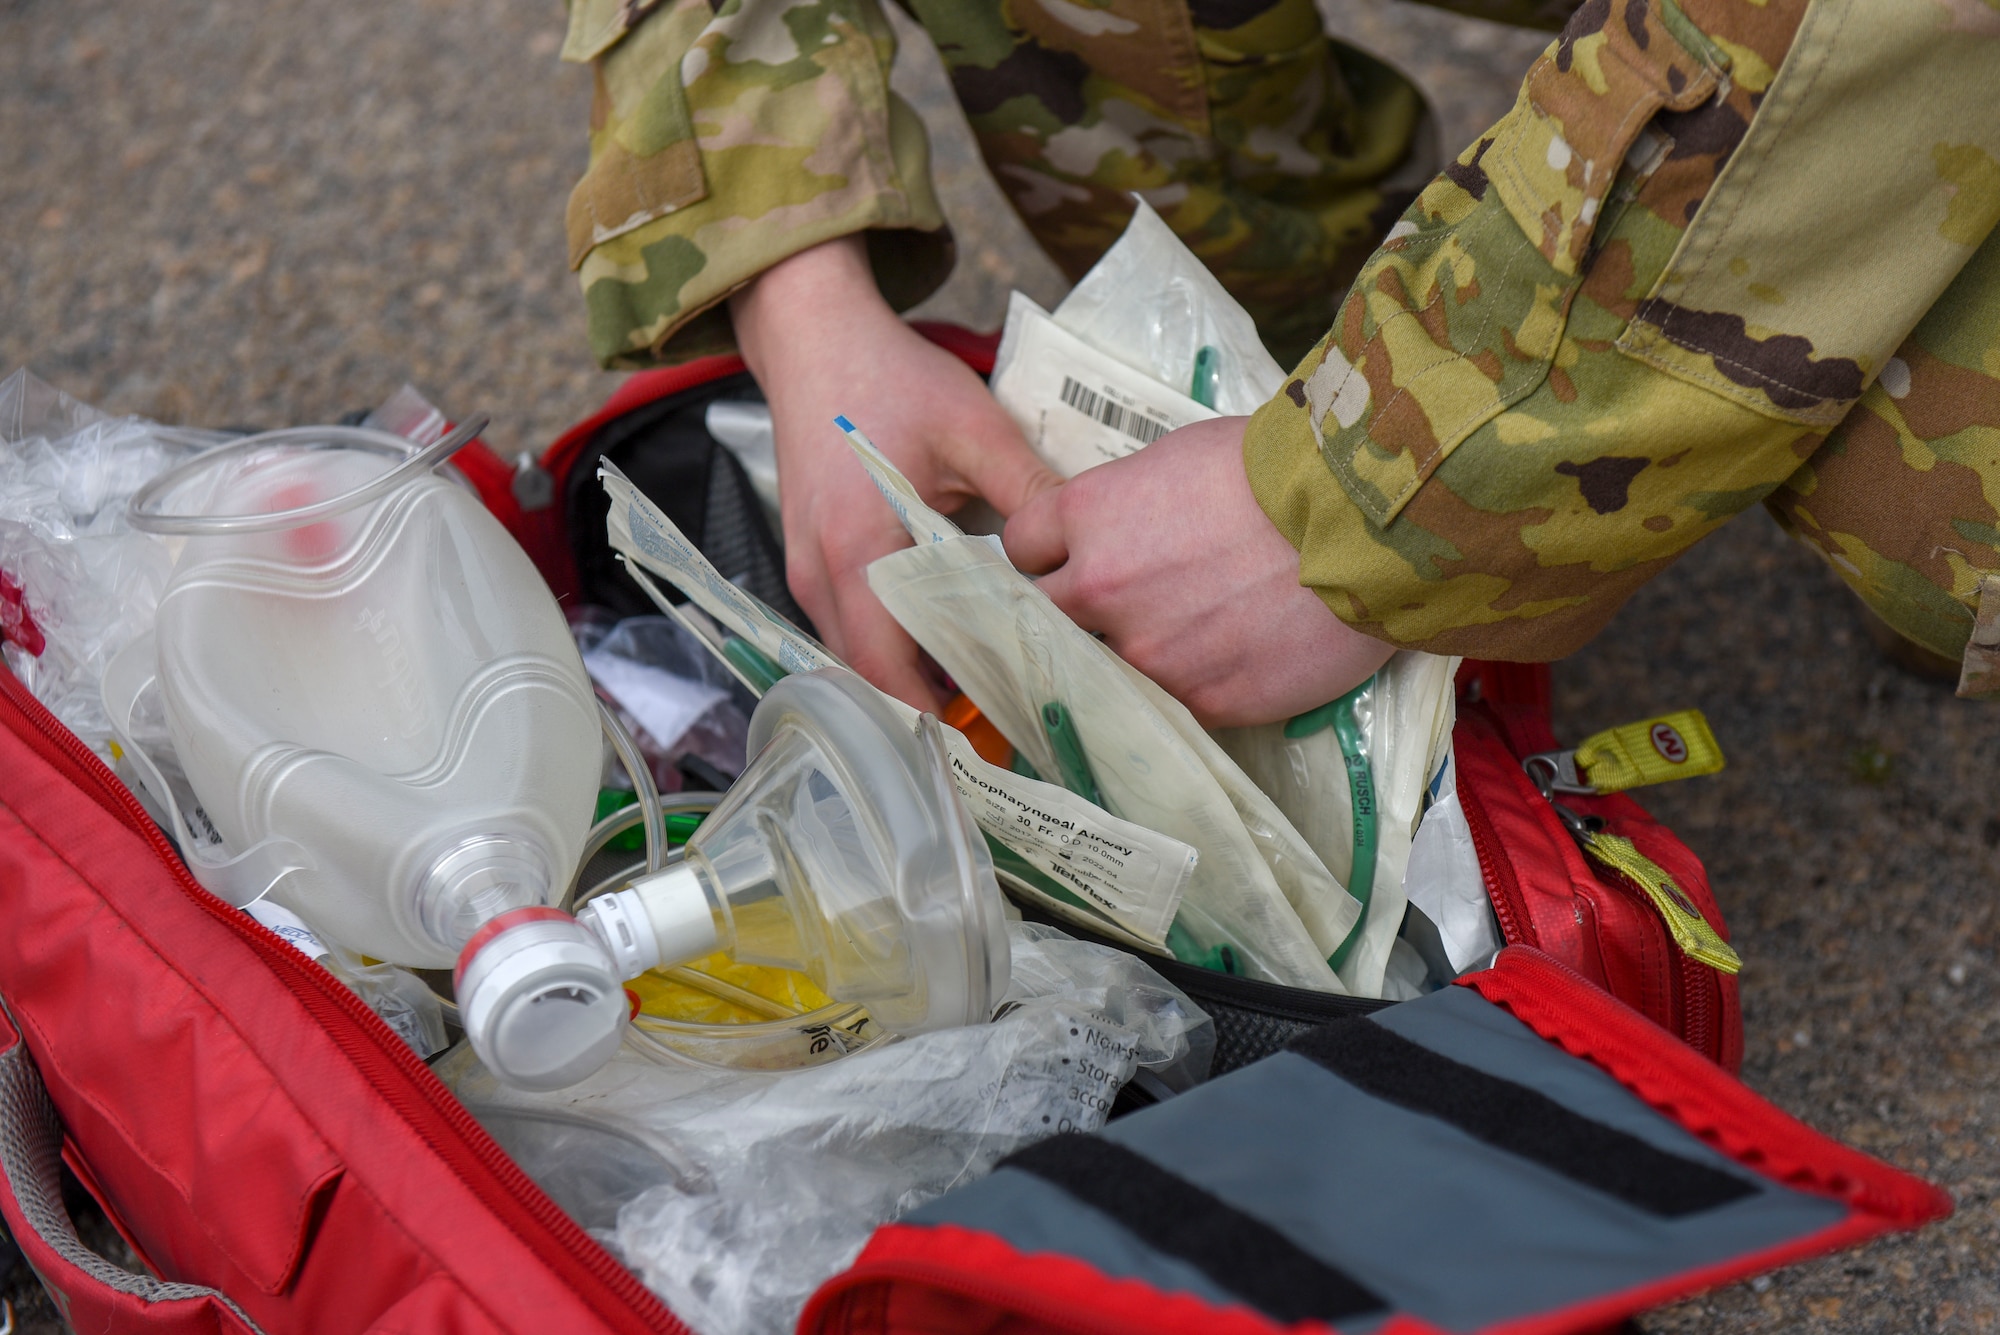 An airman displays a safety kit.